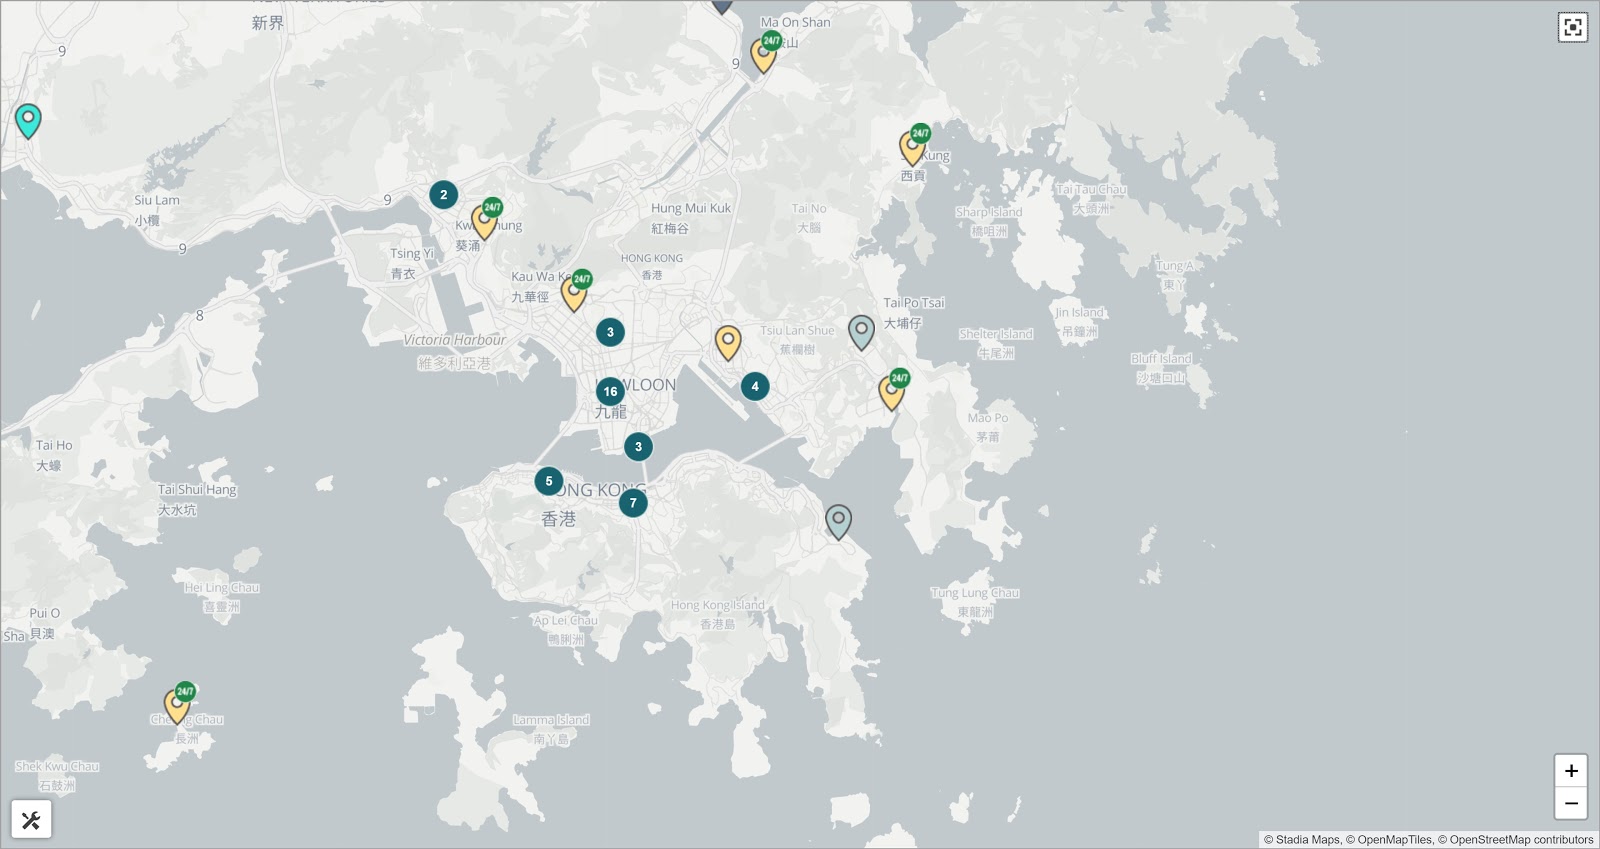 Mappa degli sportelli automatici Bitcoin a Hong Kong e dintorni